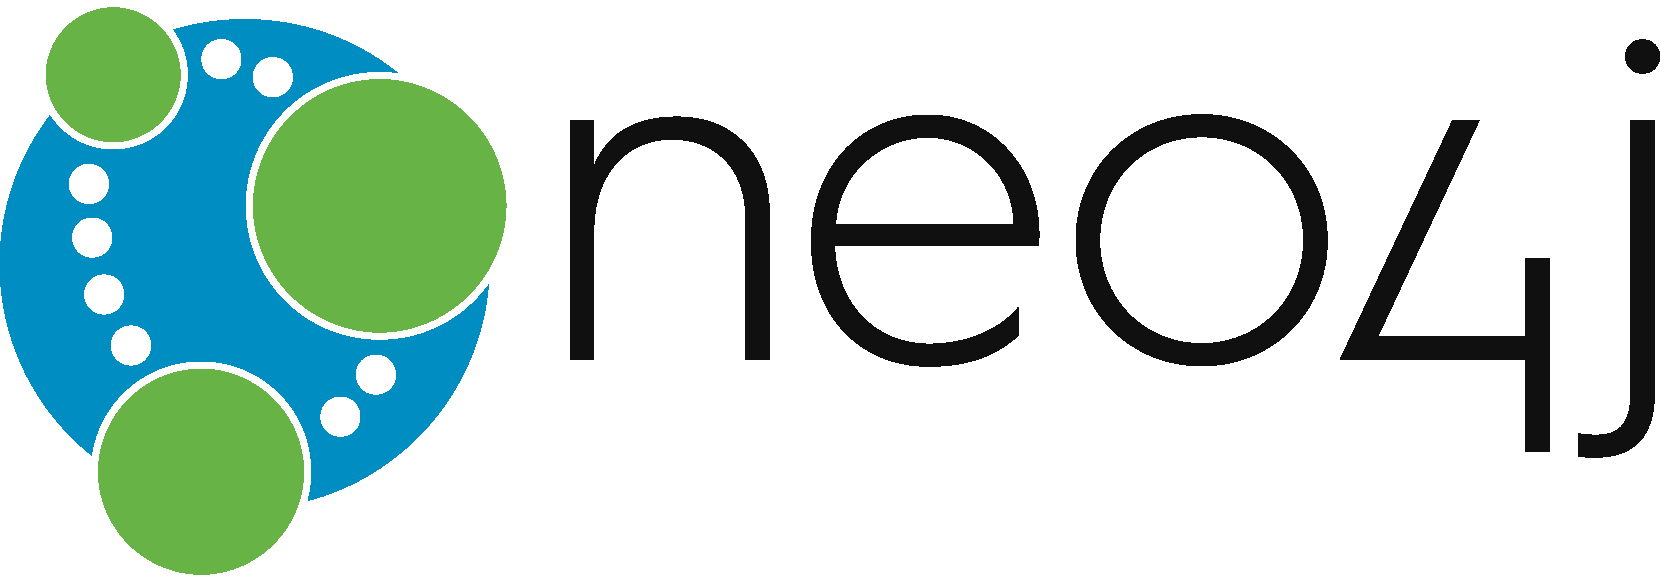 The Neo4j logo.